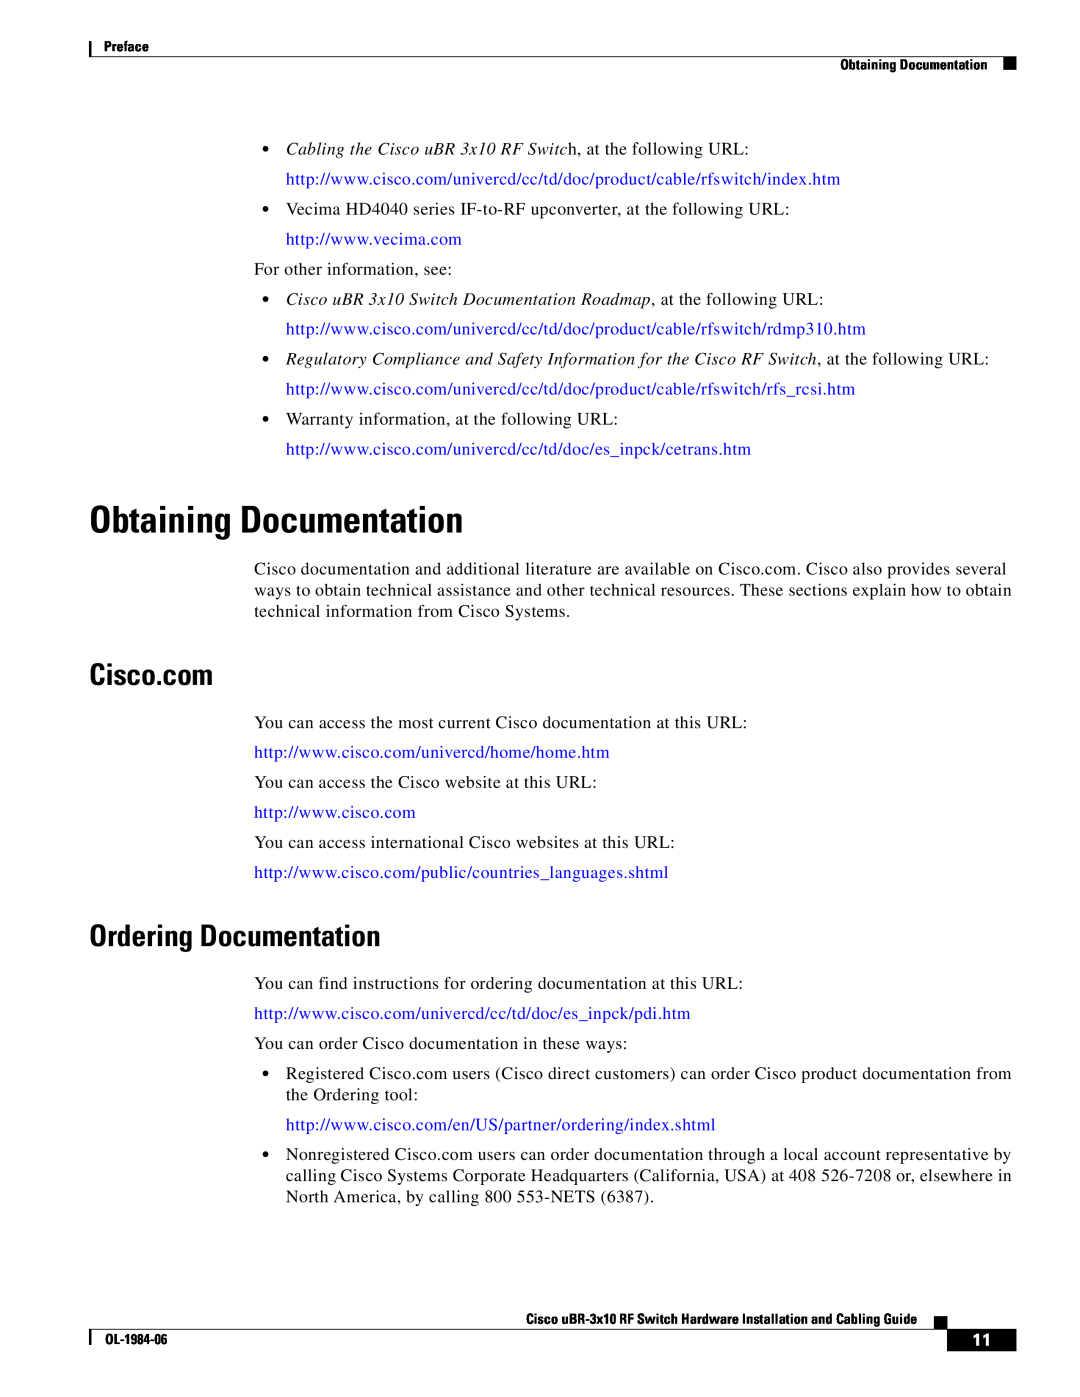 Cisco Systems UBR-3X10 manual Obtaining Documentation, Cisco.com, Ordering Documentation 